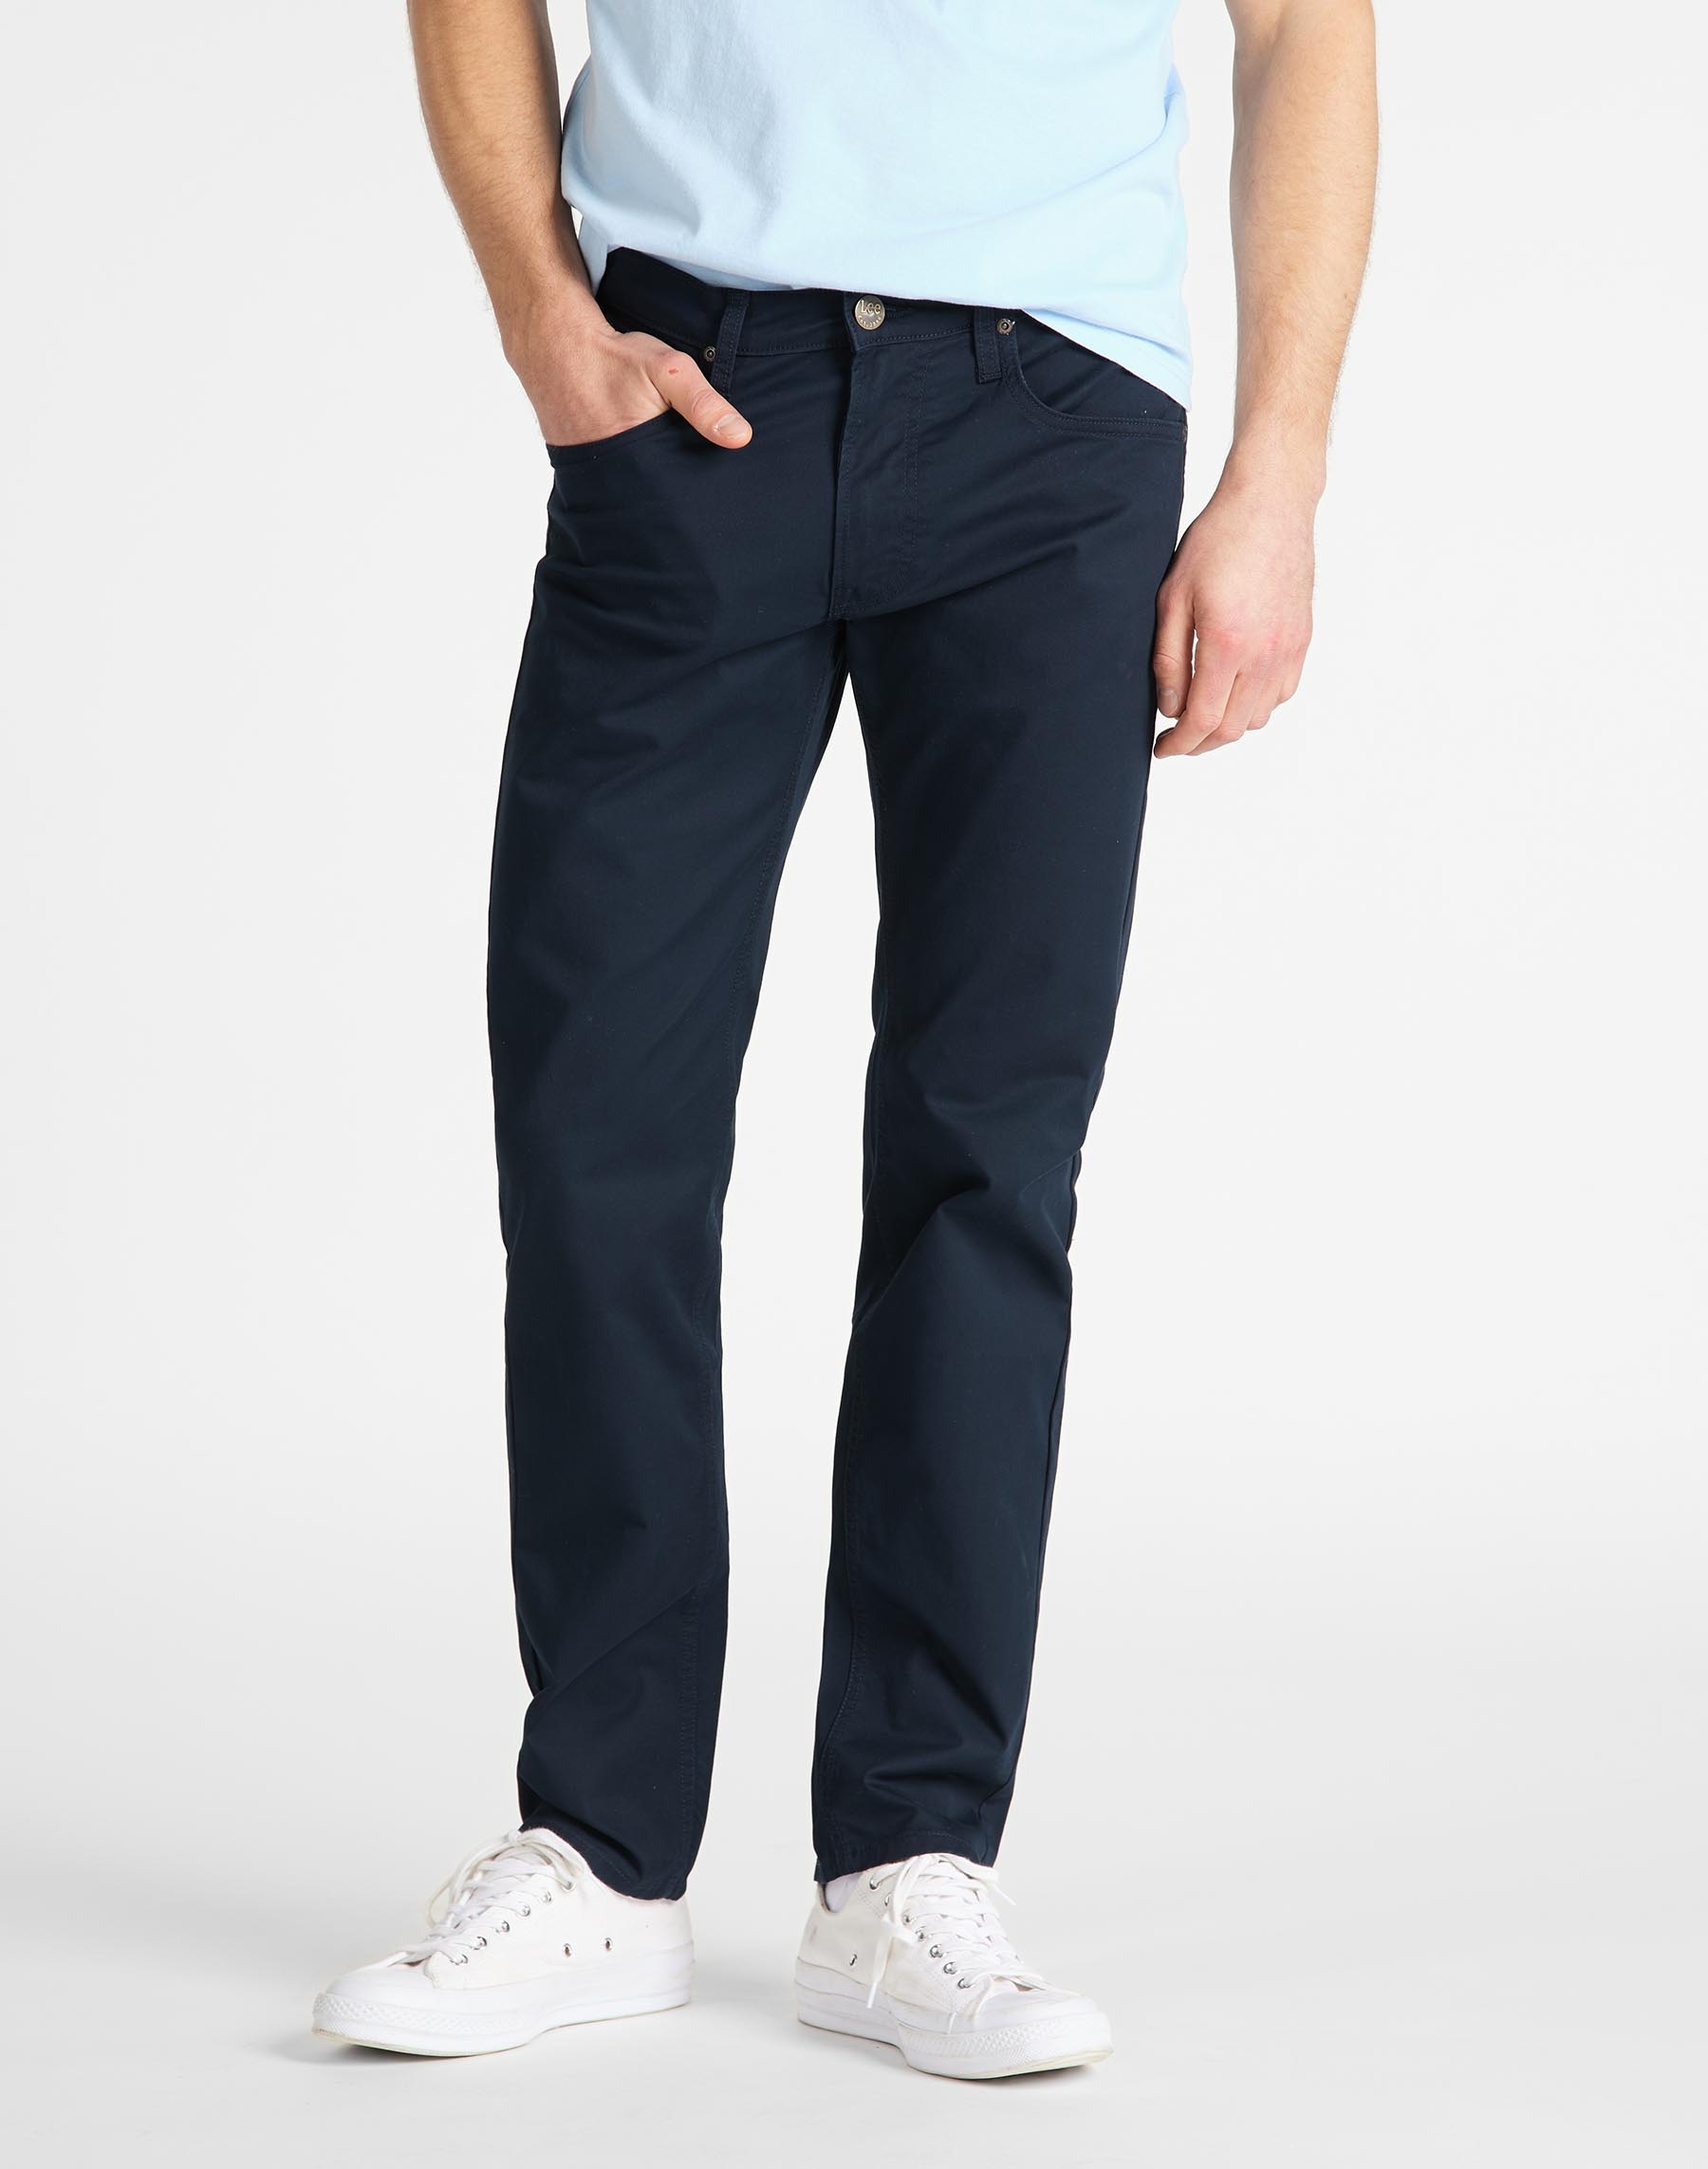 Lee Daren zip regular pantalons texans de gavardina d'home L707LA21 gavardina blau marí